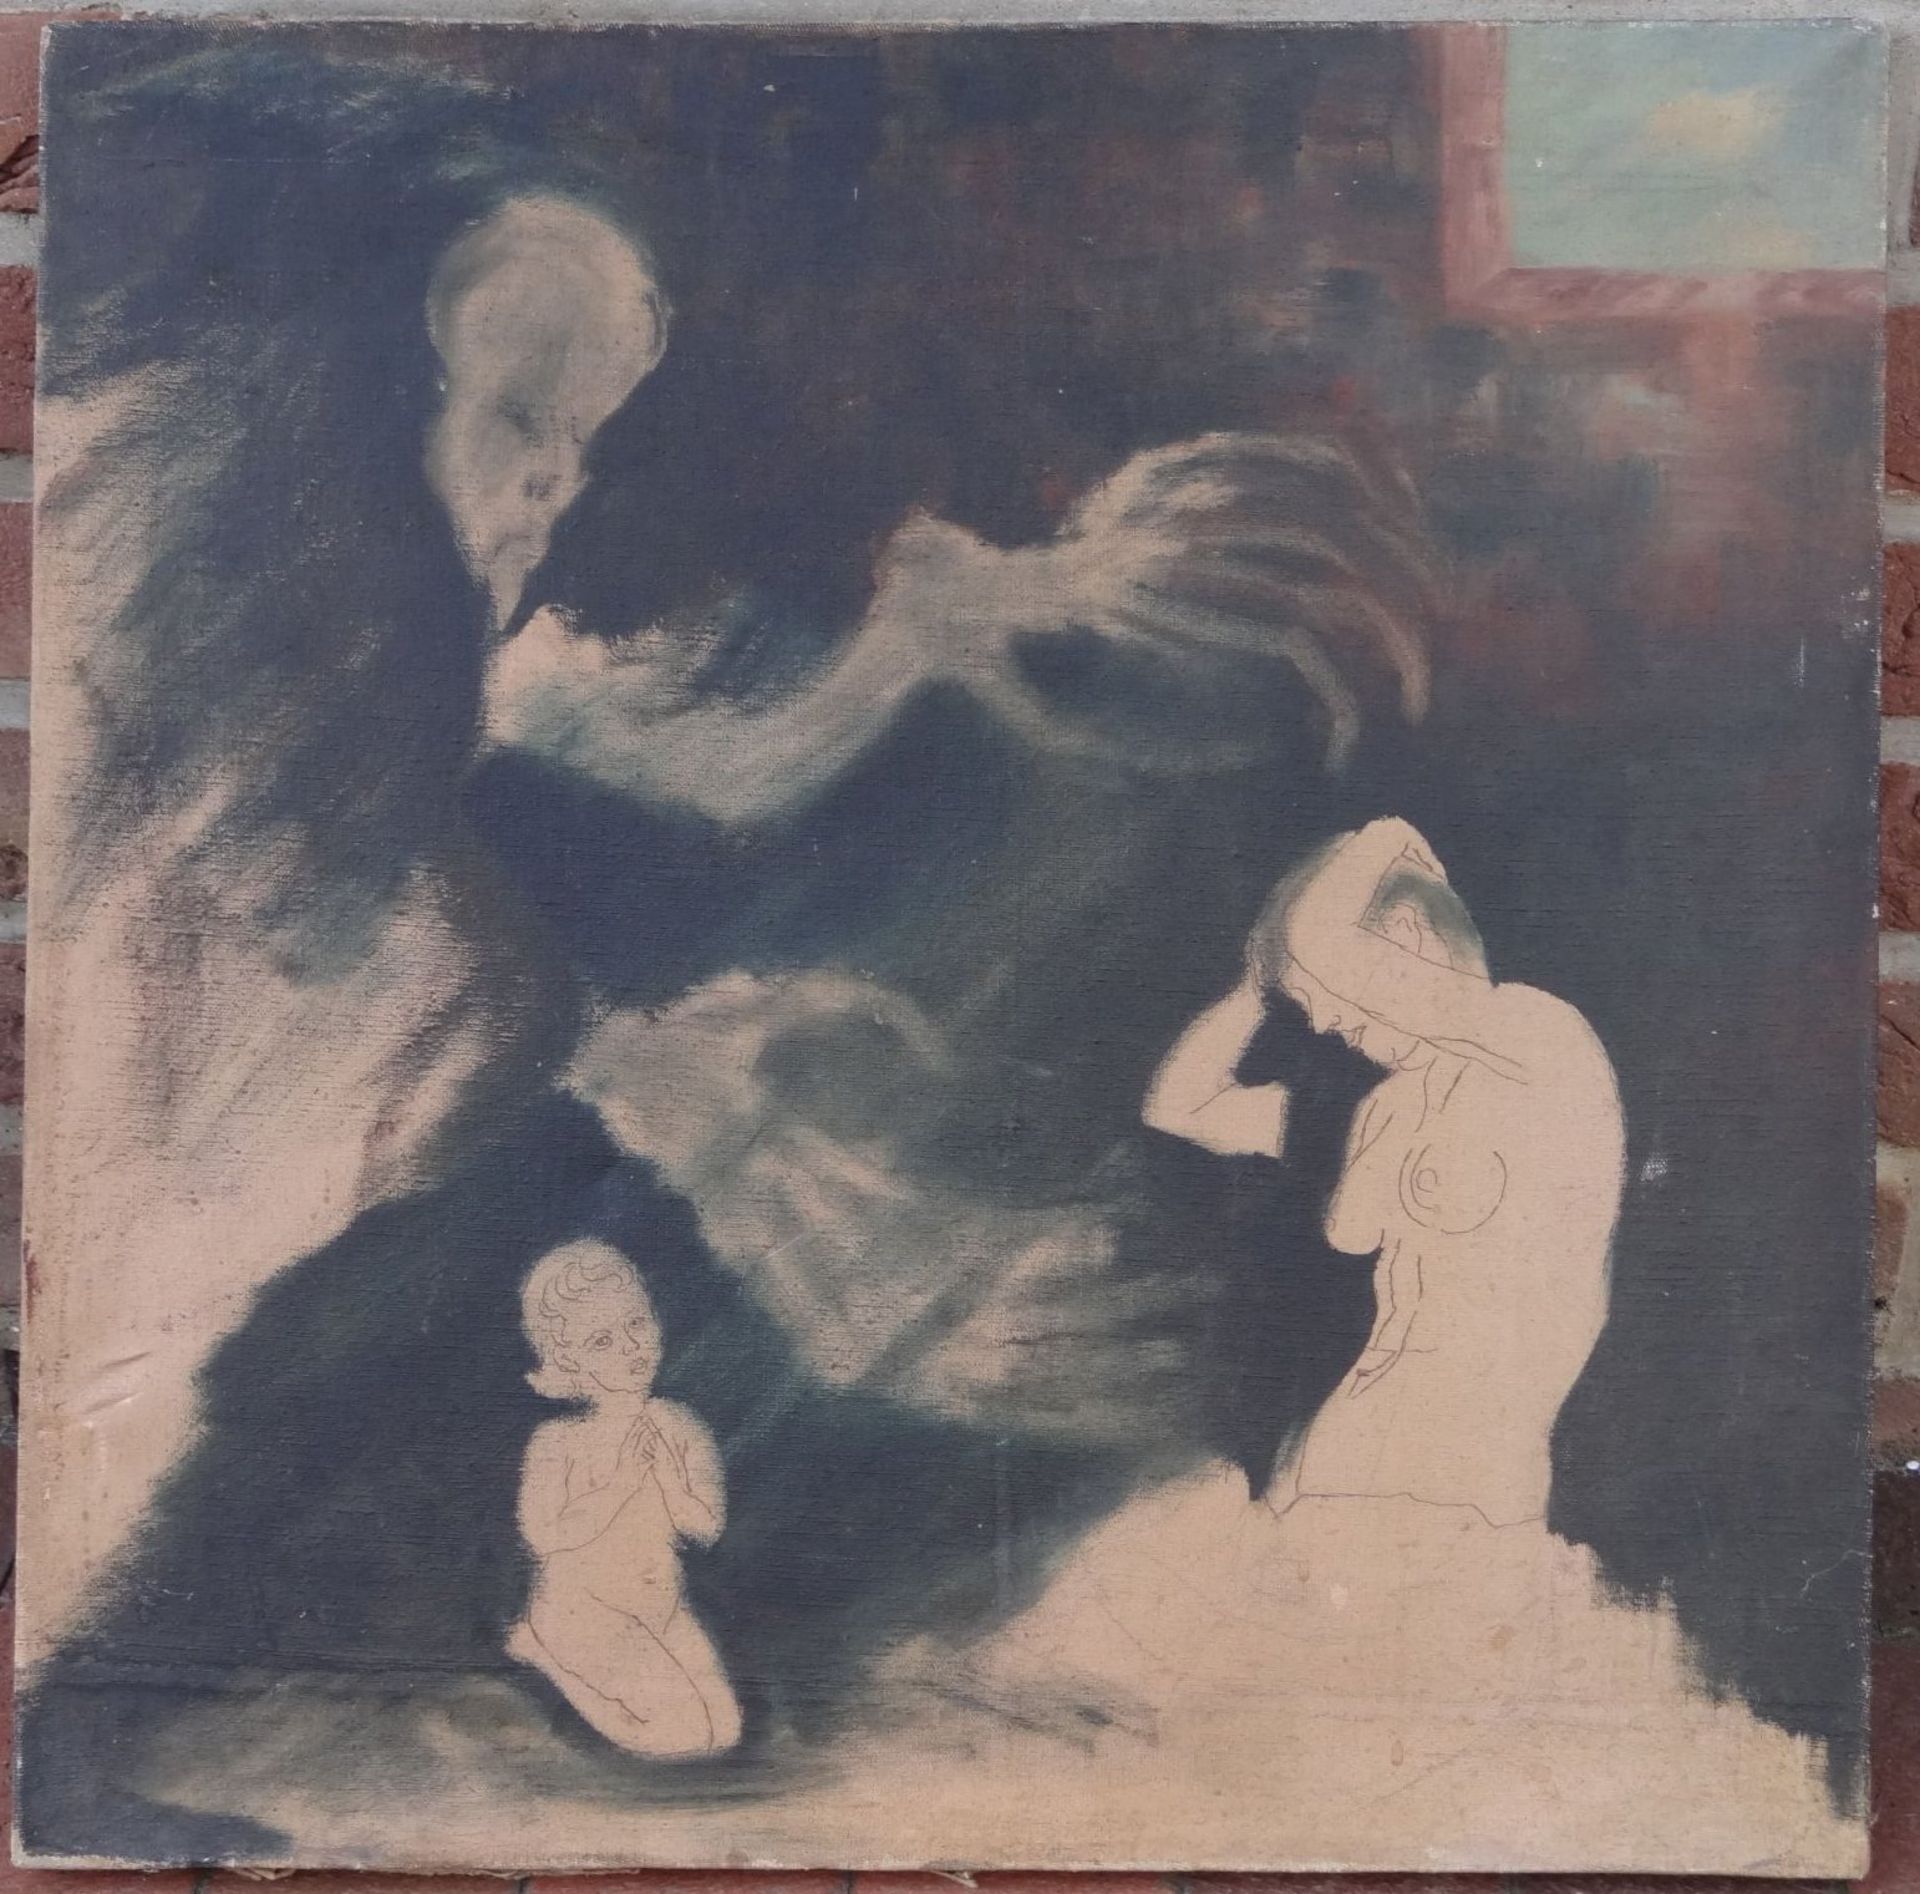 anonyme Traumszene, Öl/Leinen, 60x60 cm, wohl Willy KNOOP (1888-1966)- - -22.61 % buyer's premium on - Image 2 of 3